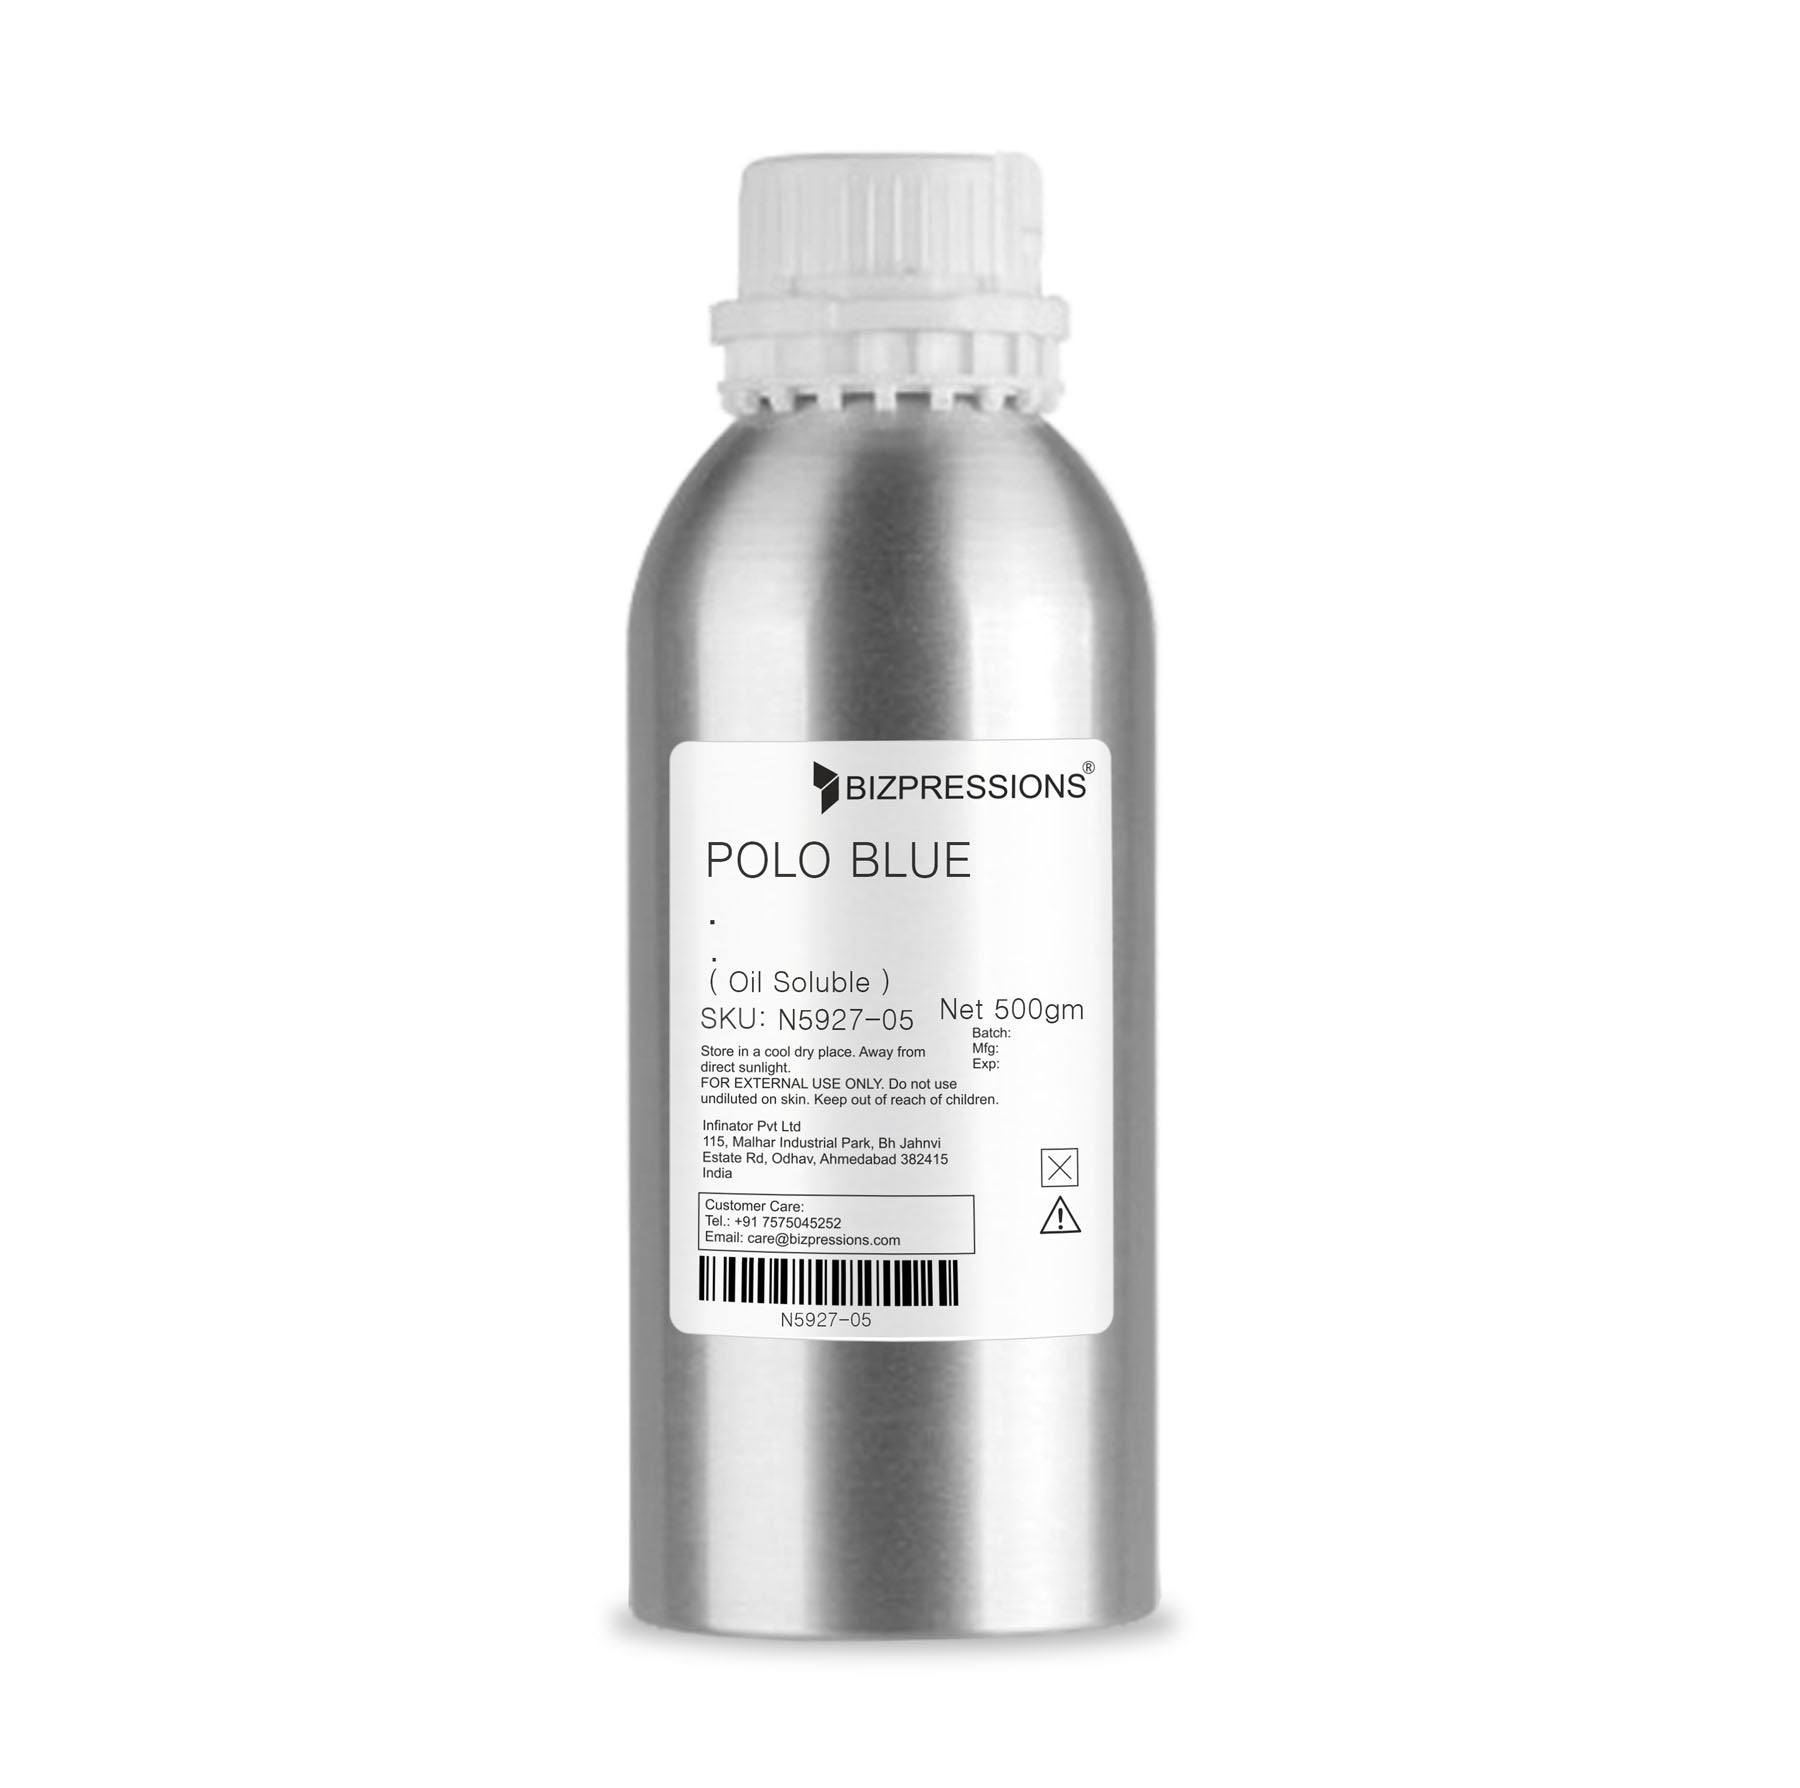 POLO BLUE - Fragrance ( Oil Soluble ) - 500 gm